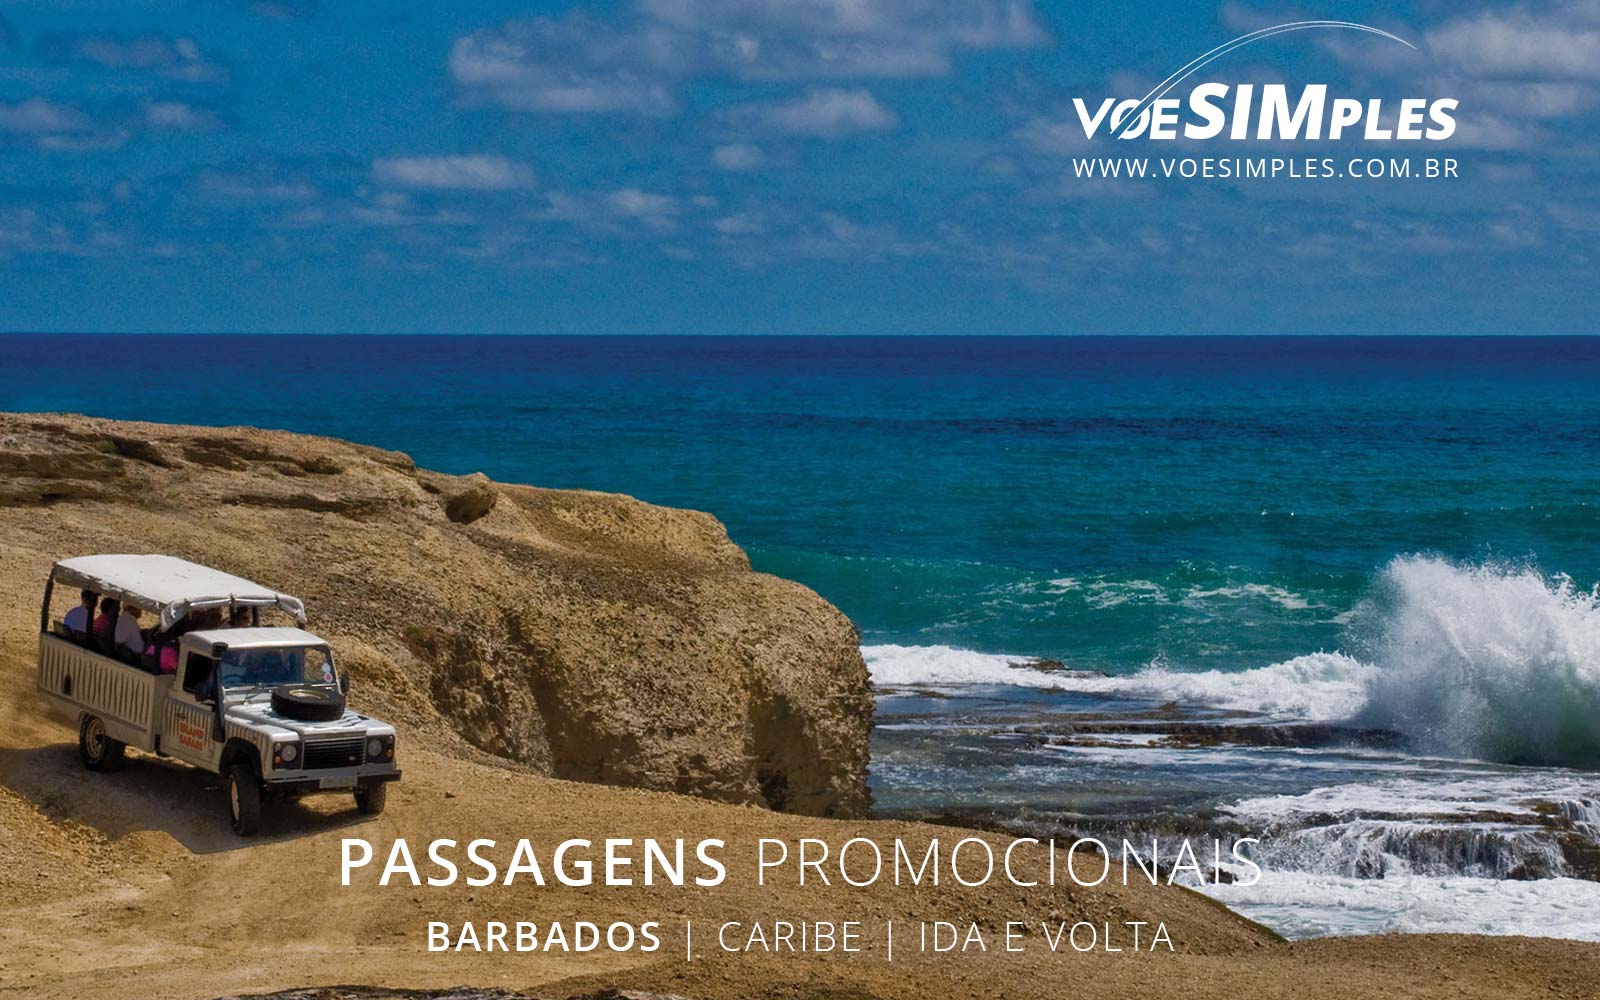 passagens-aereas-baratas-barbados-caribe-ilhas-caribe-voe-simples-passages-aereas-promocionais-caribe-passagens-promo-barbados